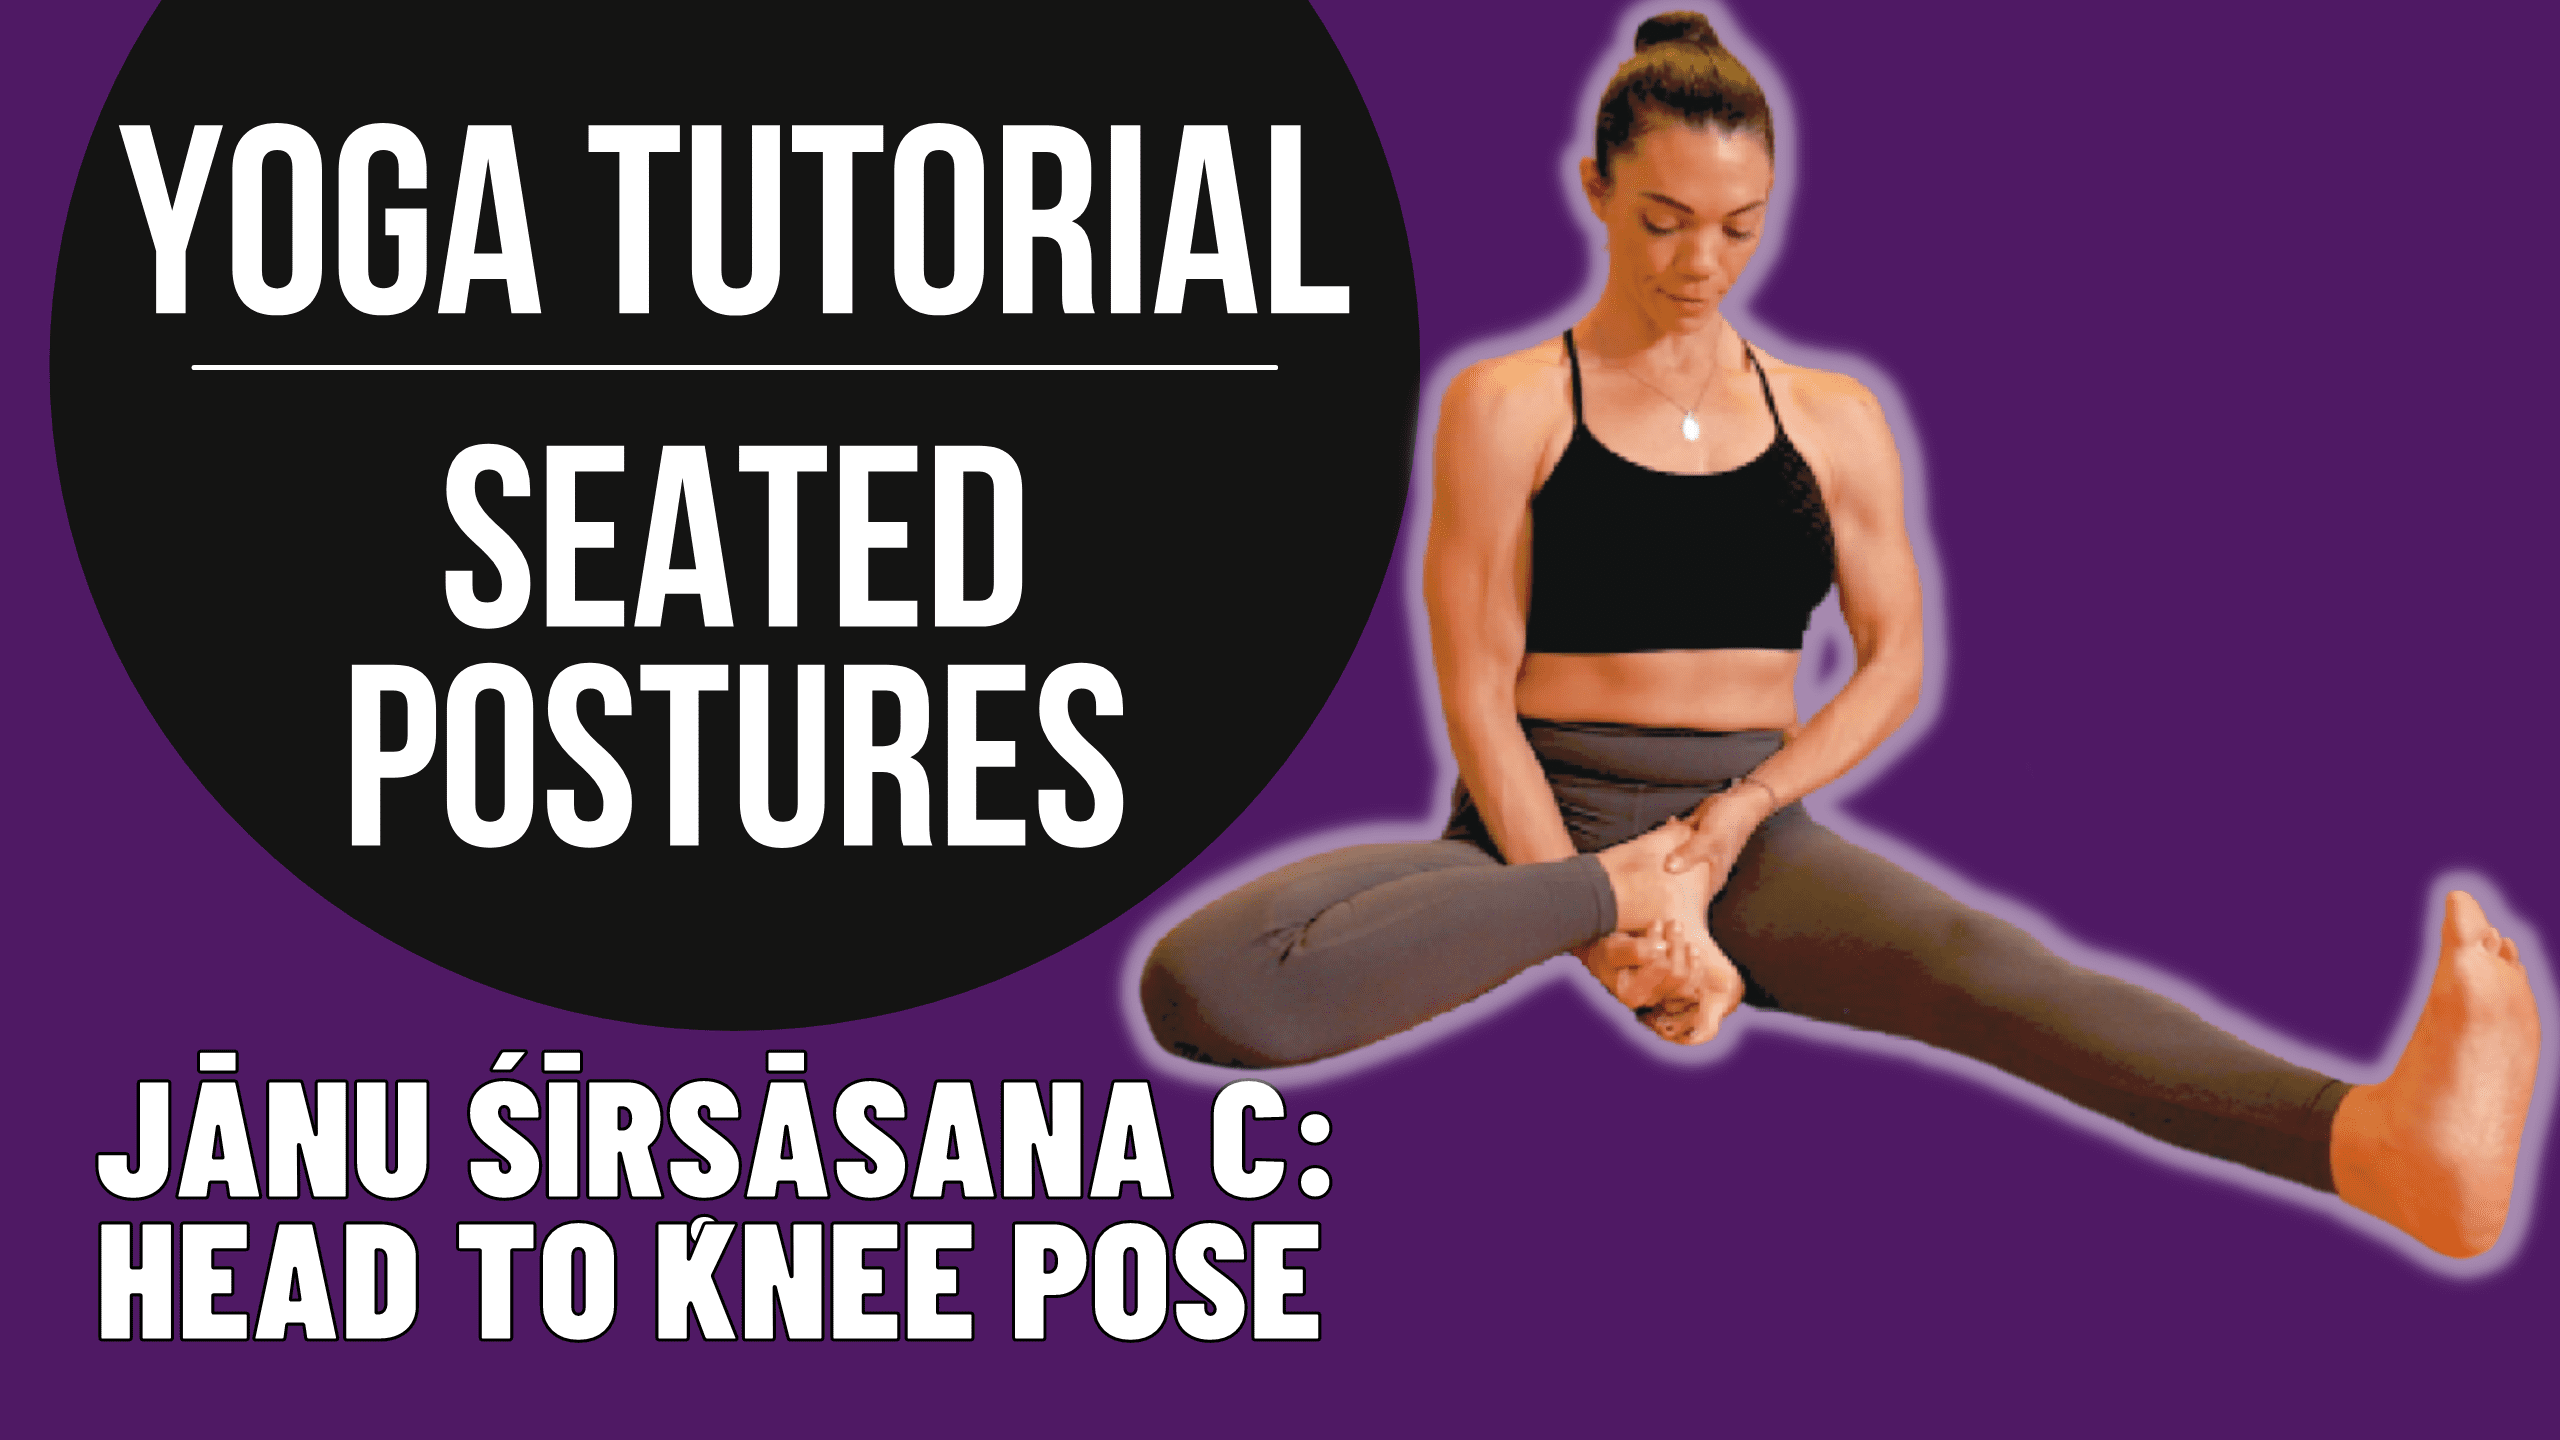 Curejoy Yoga - Proper Way To Do Janu Sirsasana(Head To Knee Pose) | Facebook